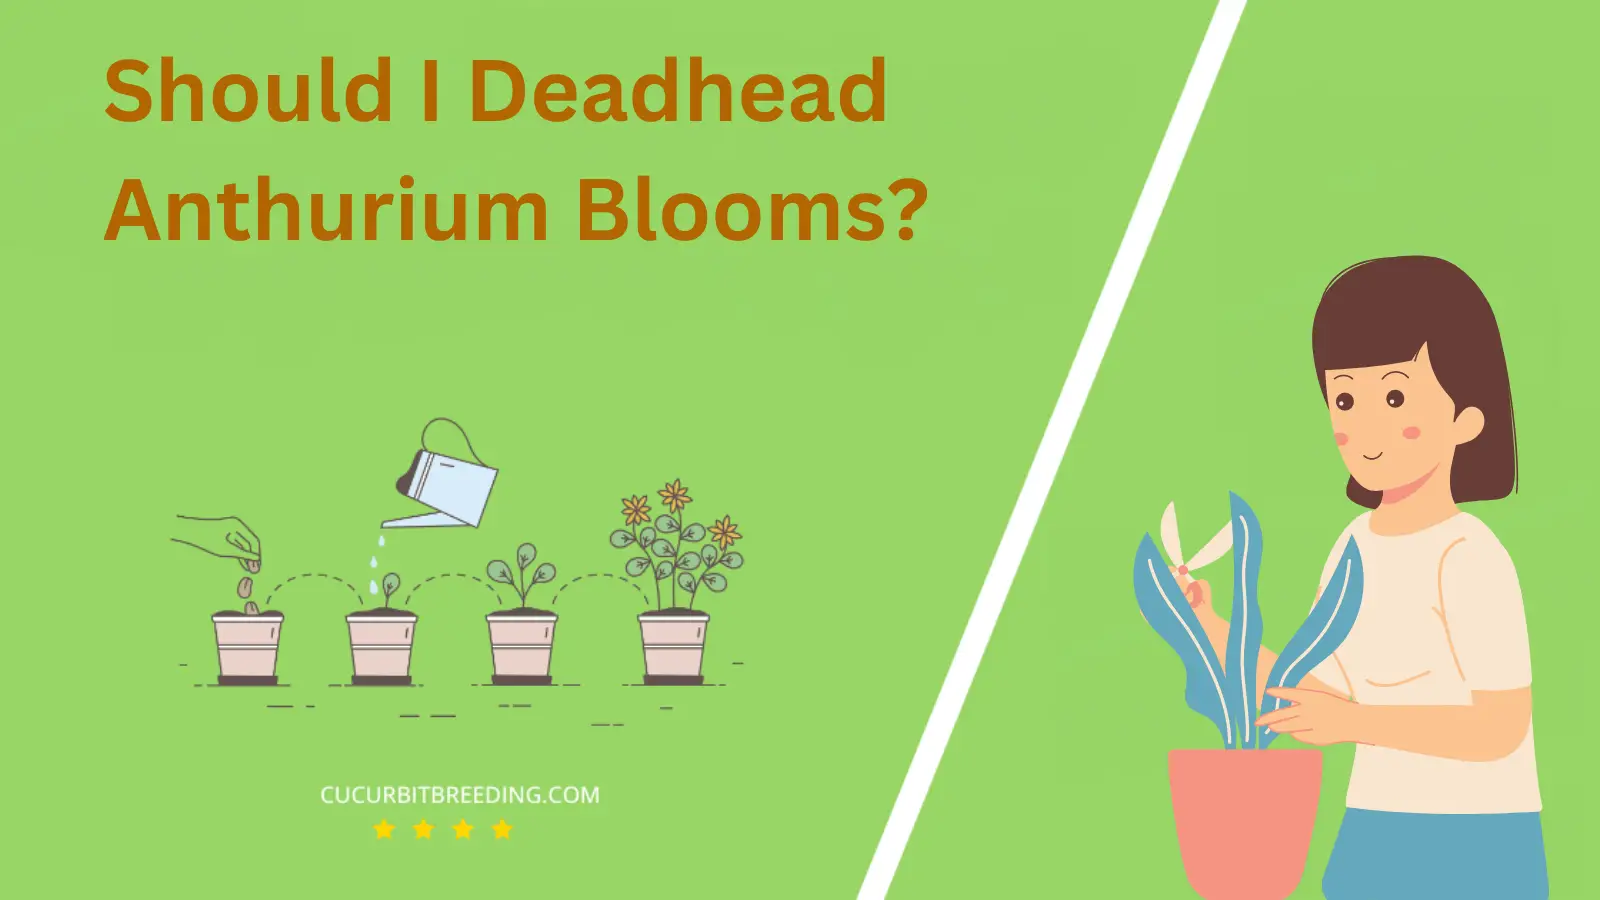 Should I Deadhead Anthurium Blooms?